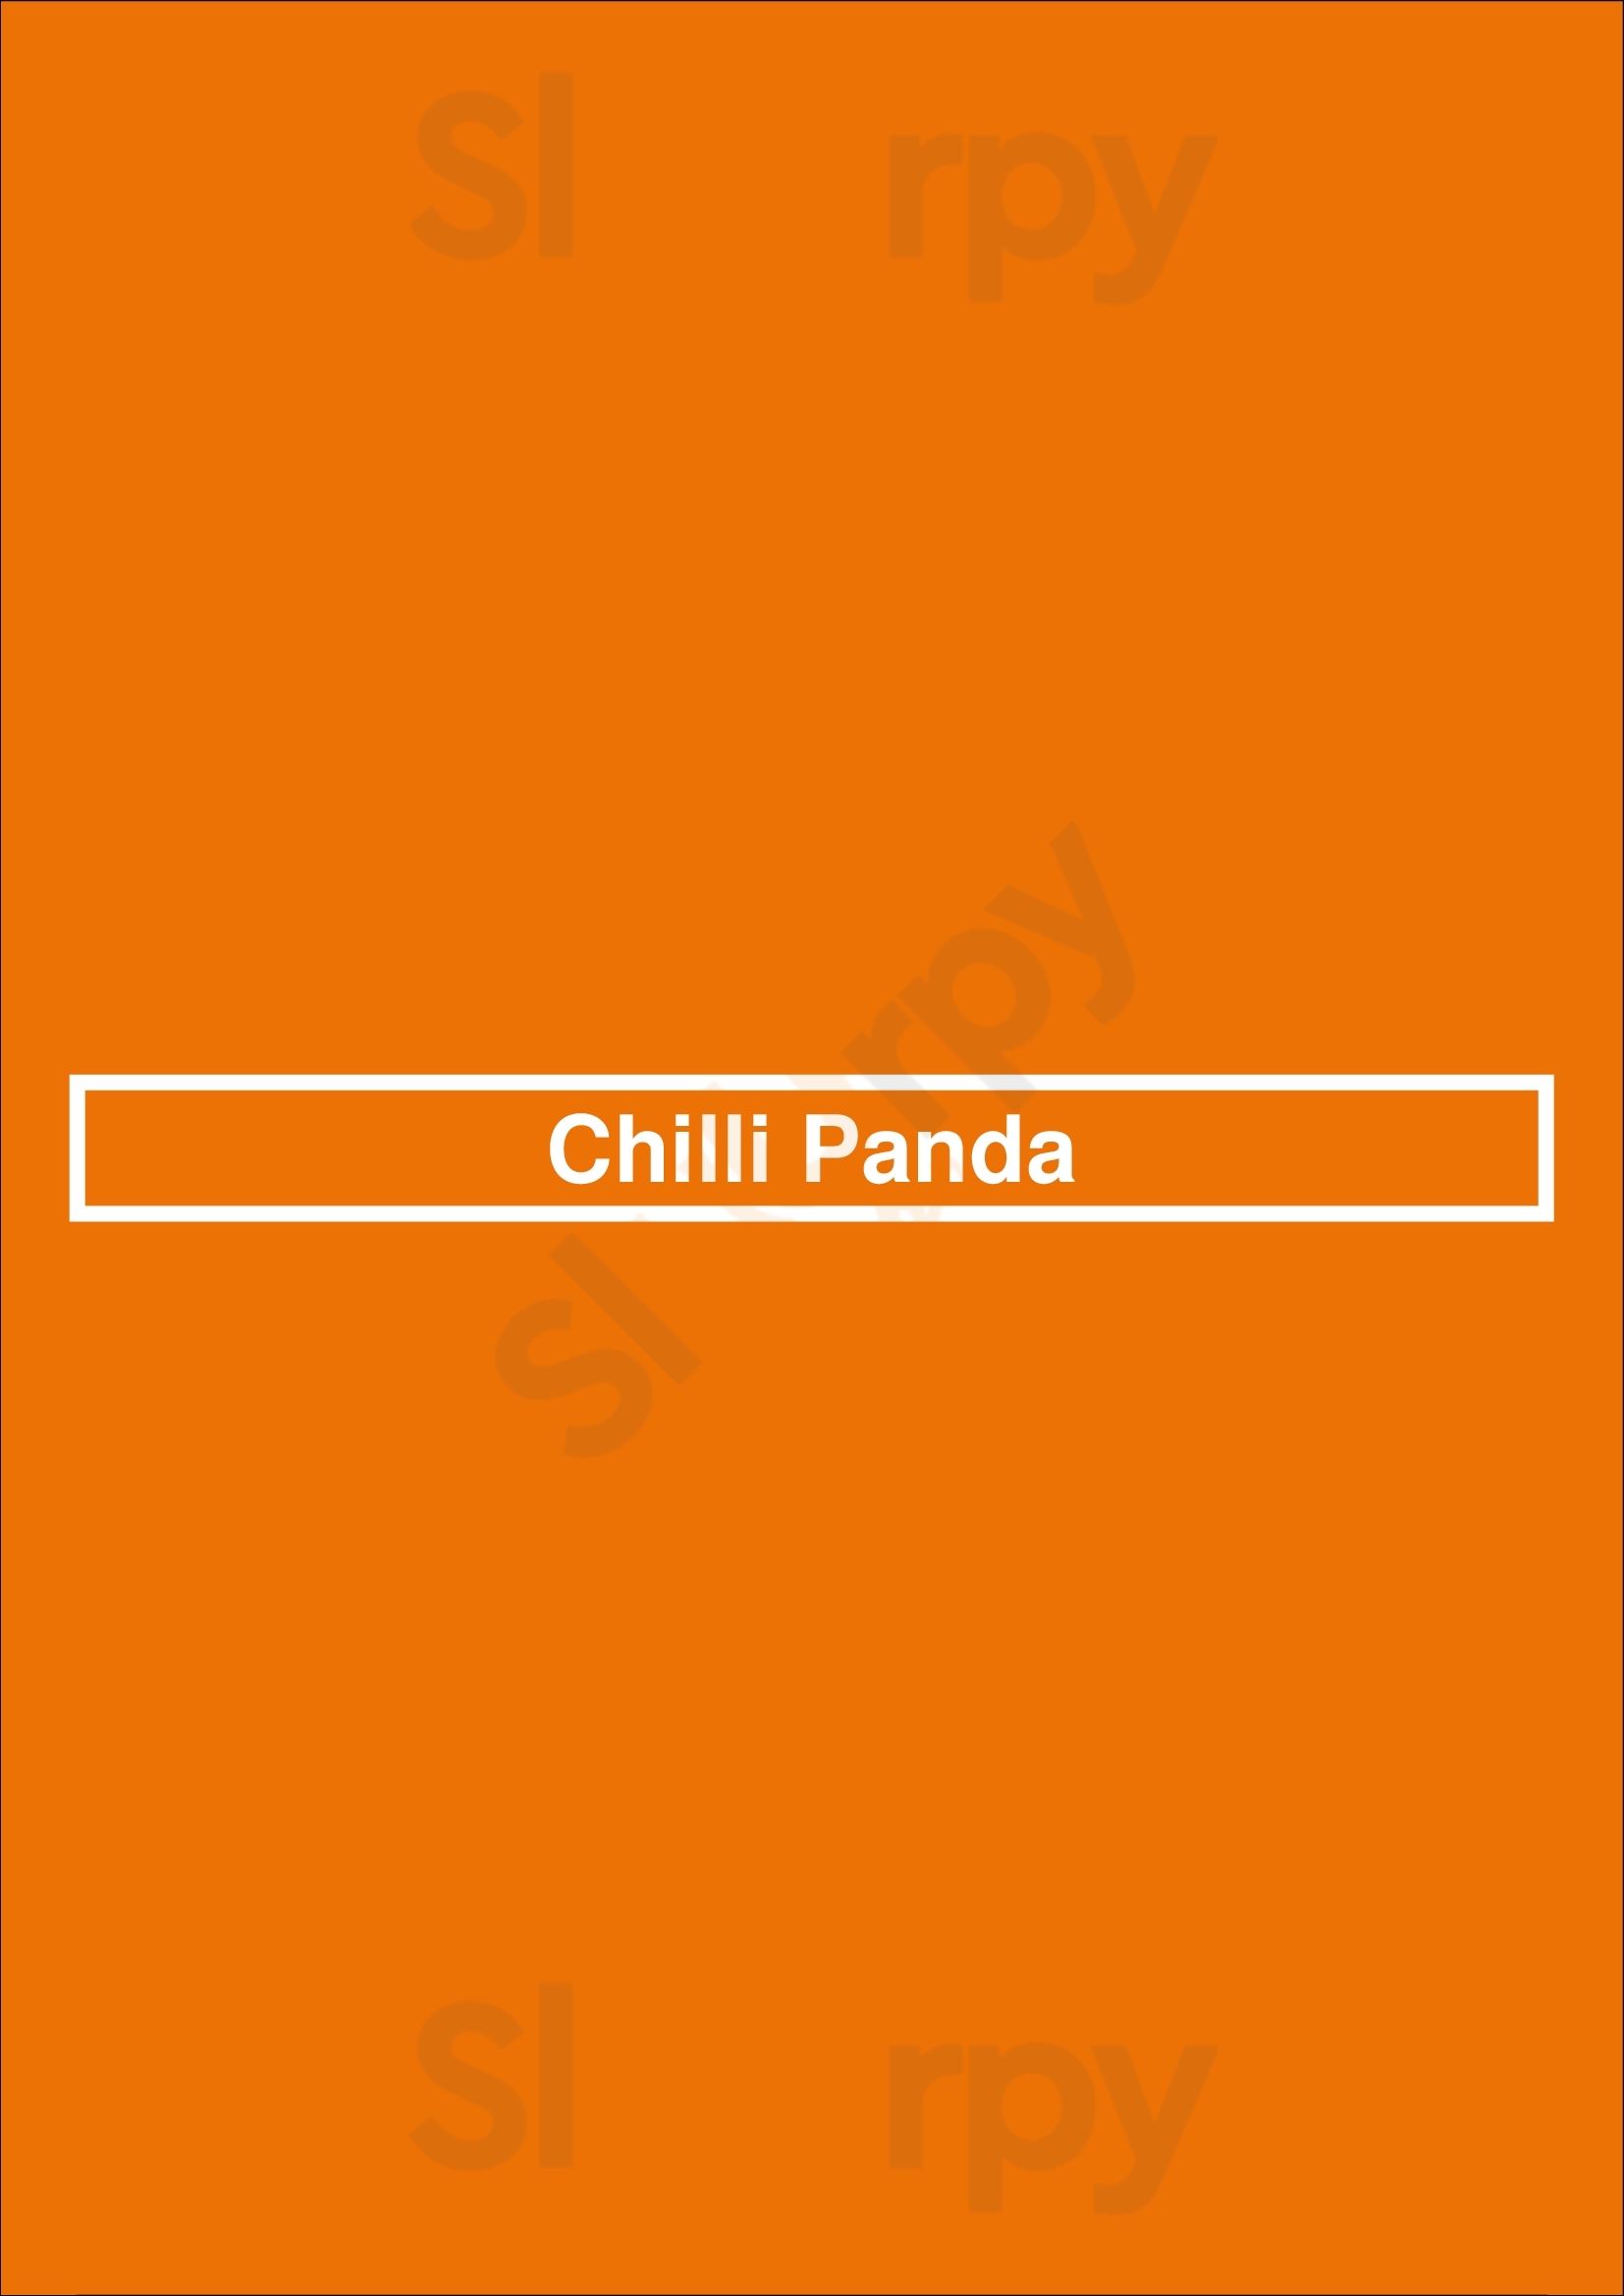 Chilli Panda Perth Menu - 1